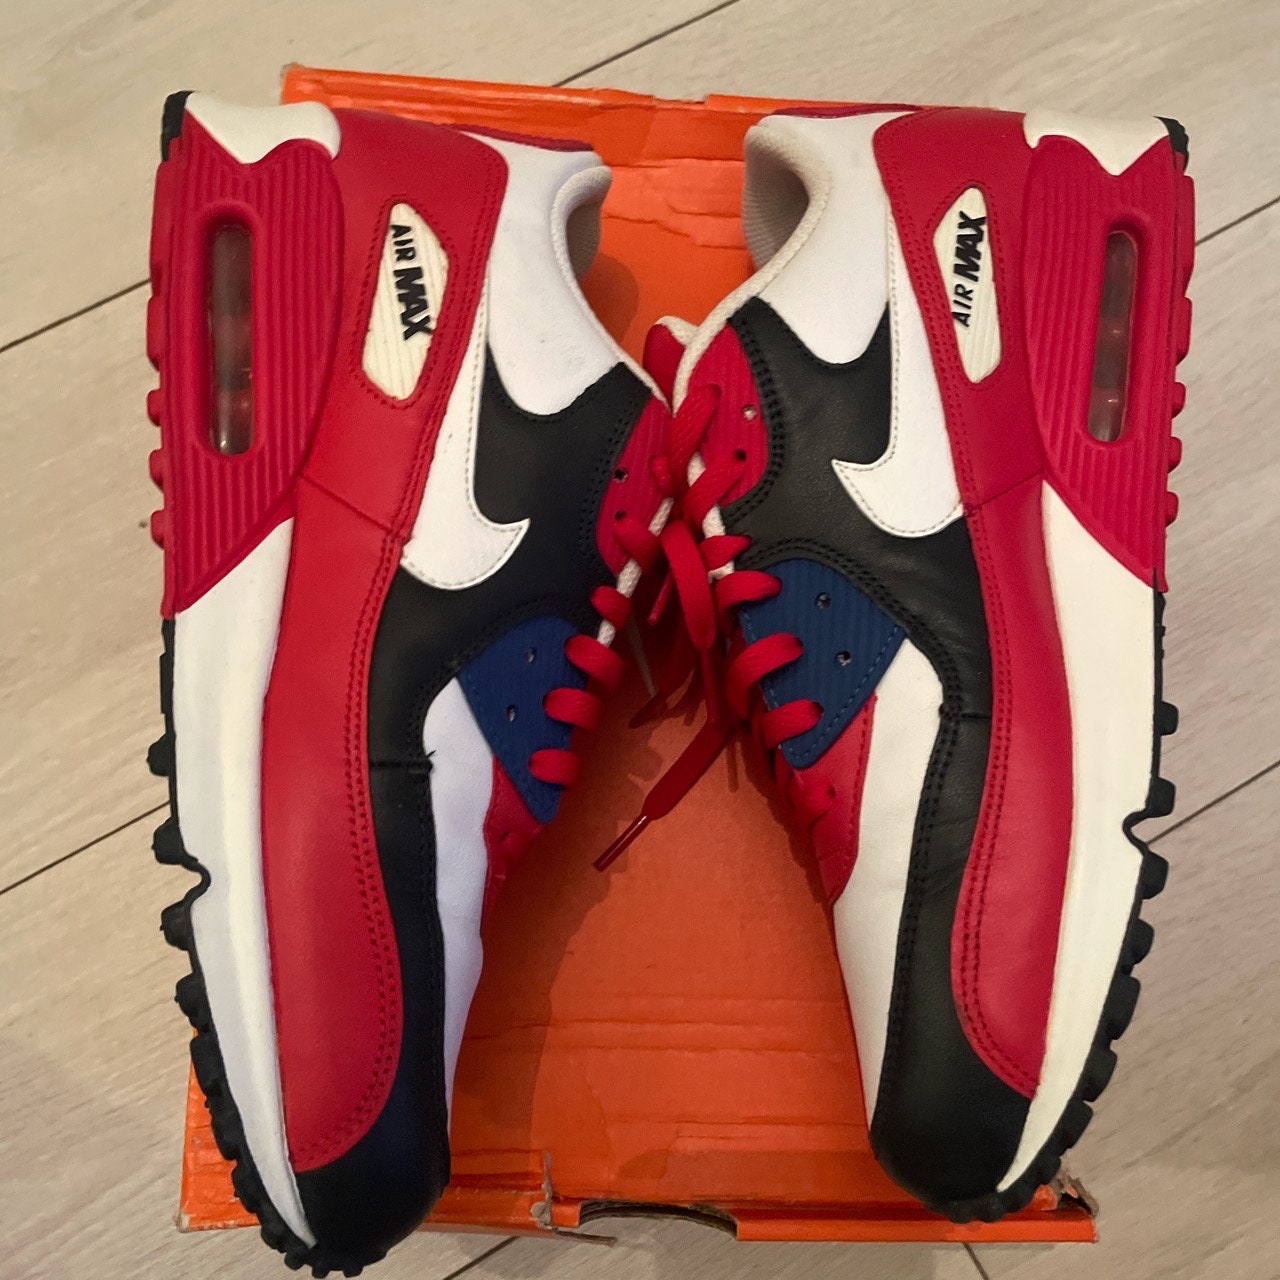 Custom Nike Air Max 90's (EASY) 👟🎨 